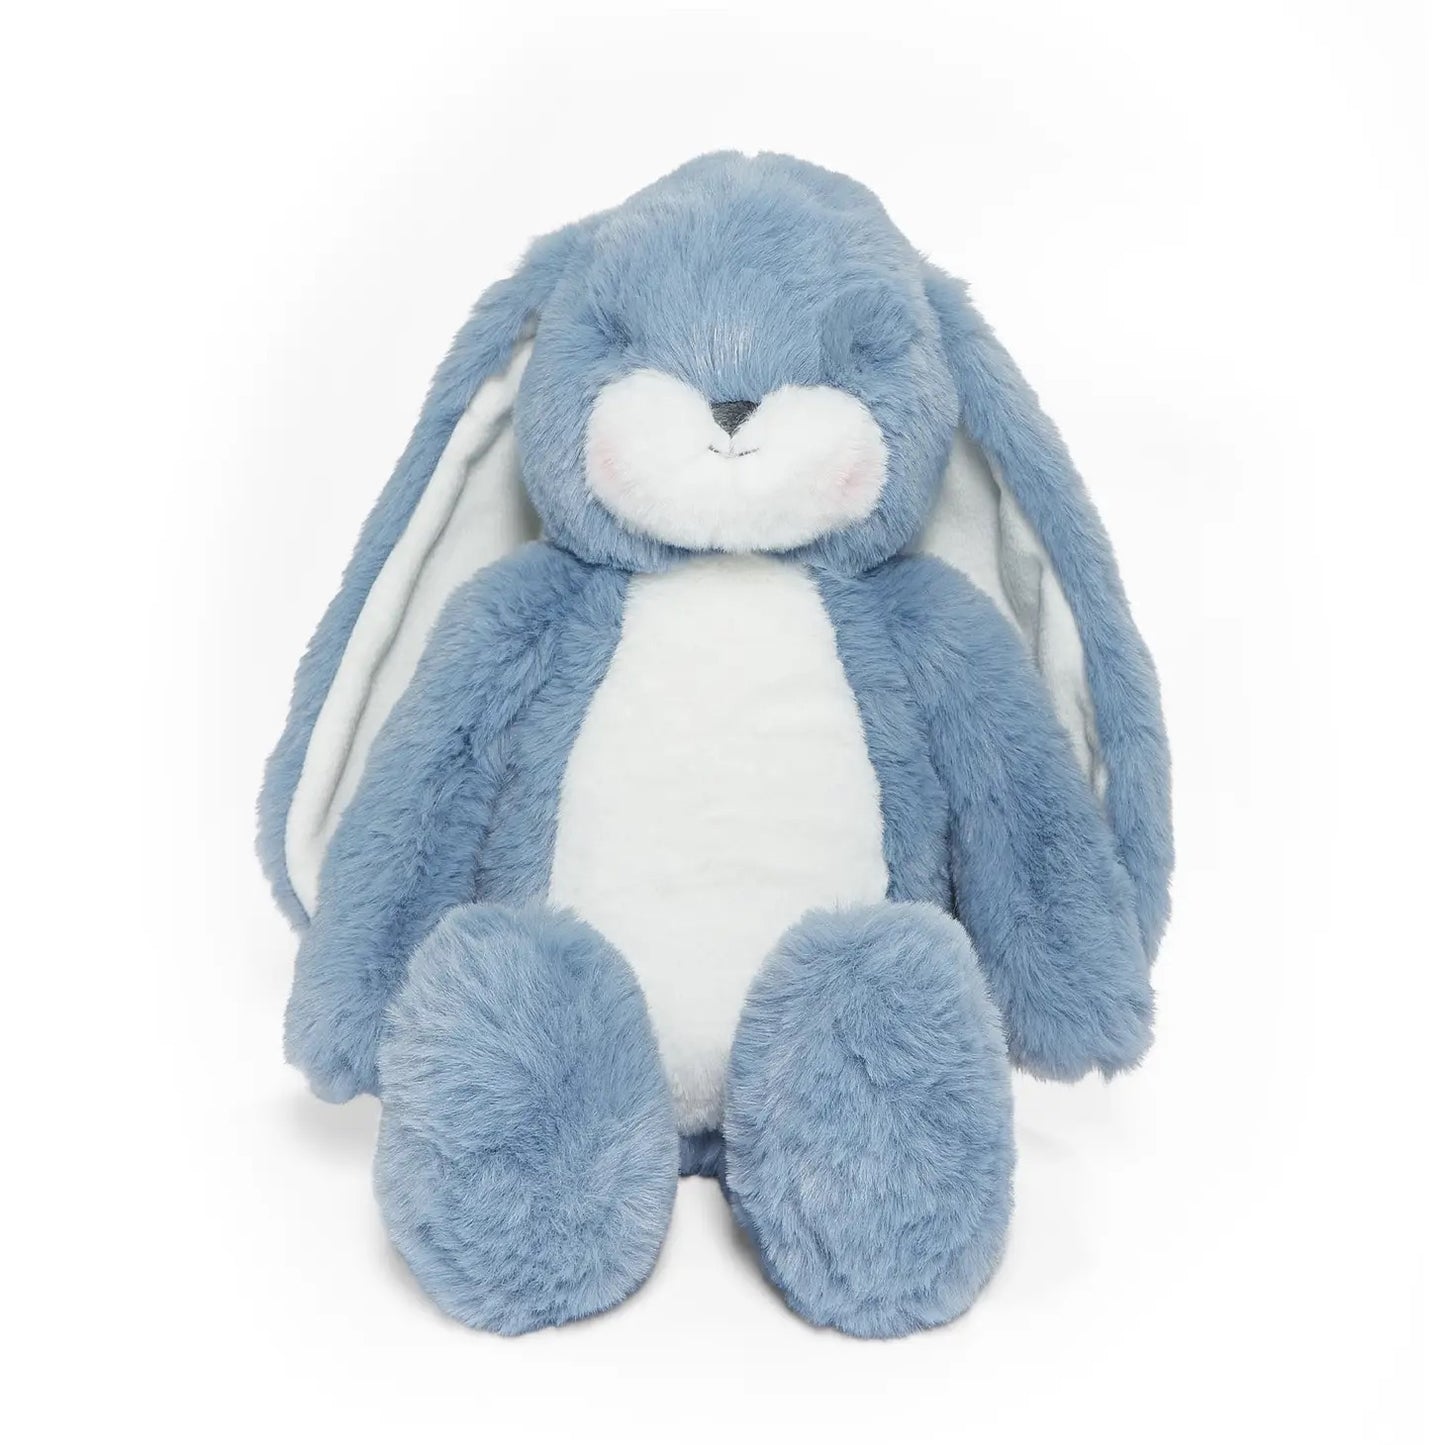 Little Nibble 12" Floppy Bunny - Blue